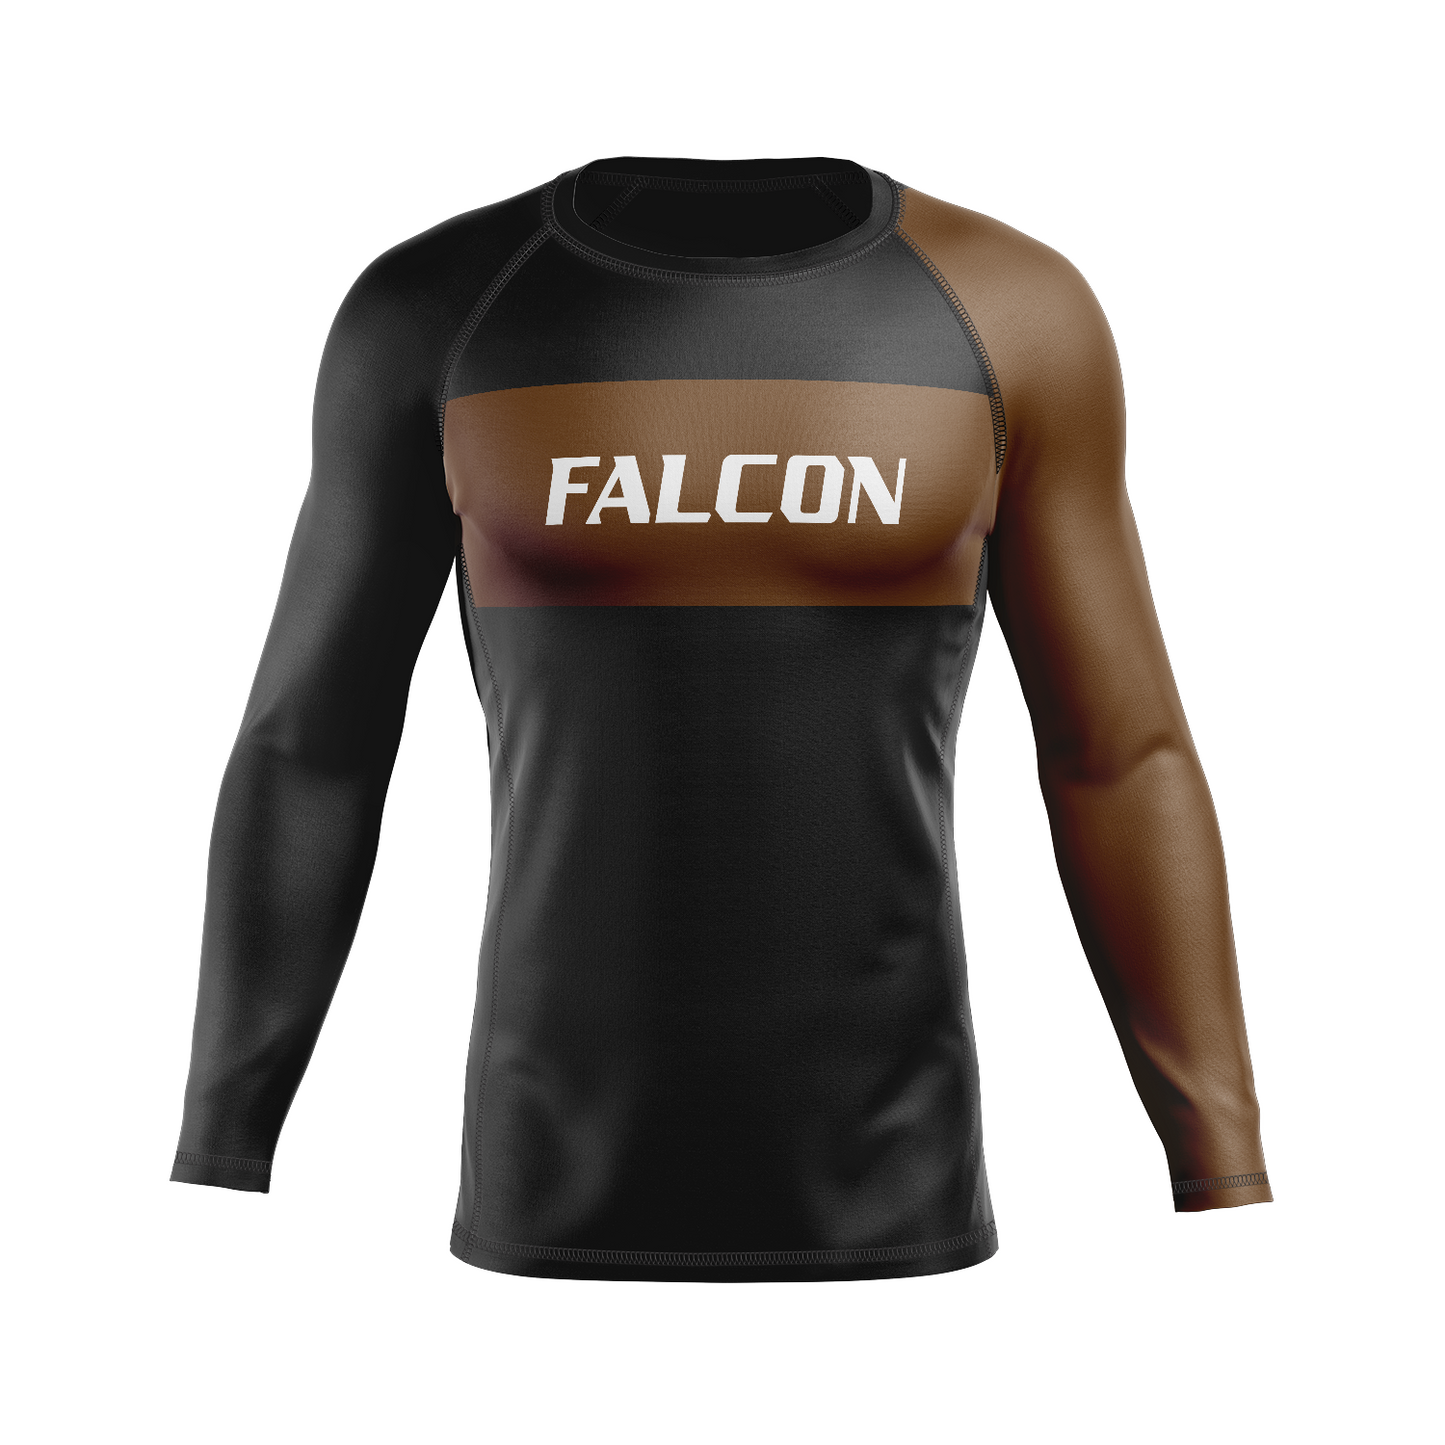 Falcon BJJ men's rash guard Standard Issue, black and brown